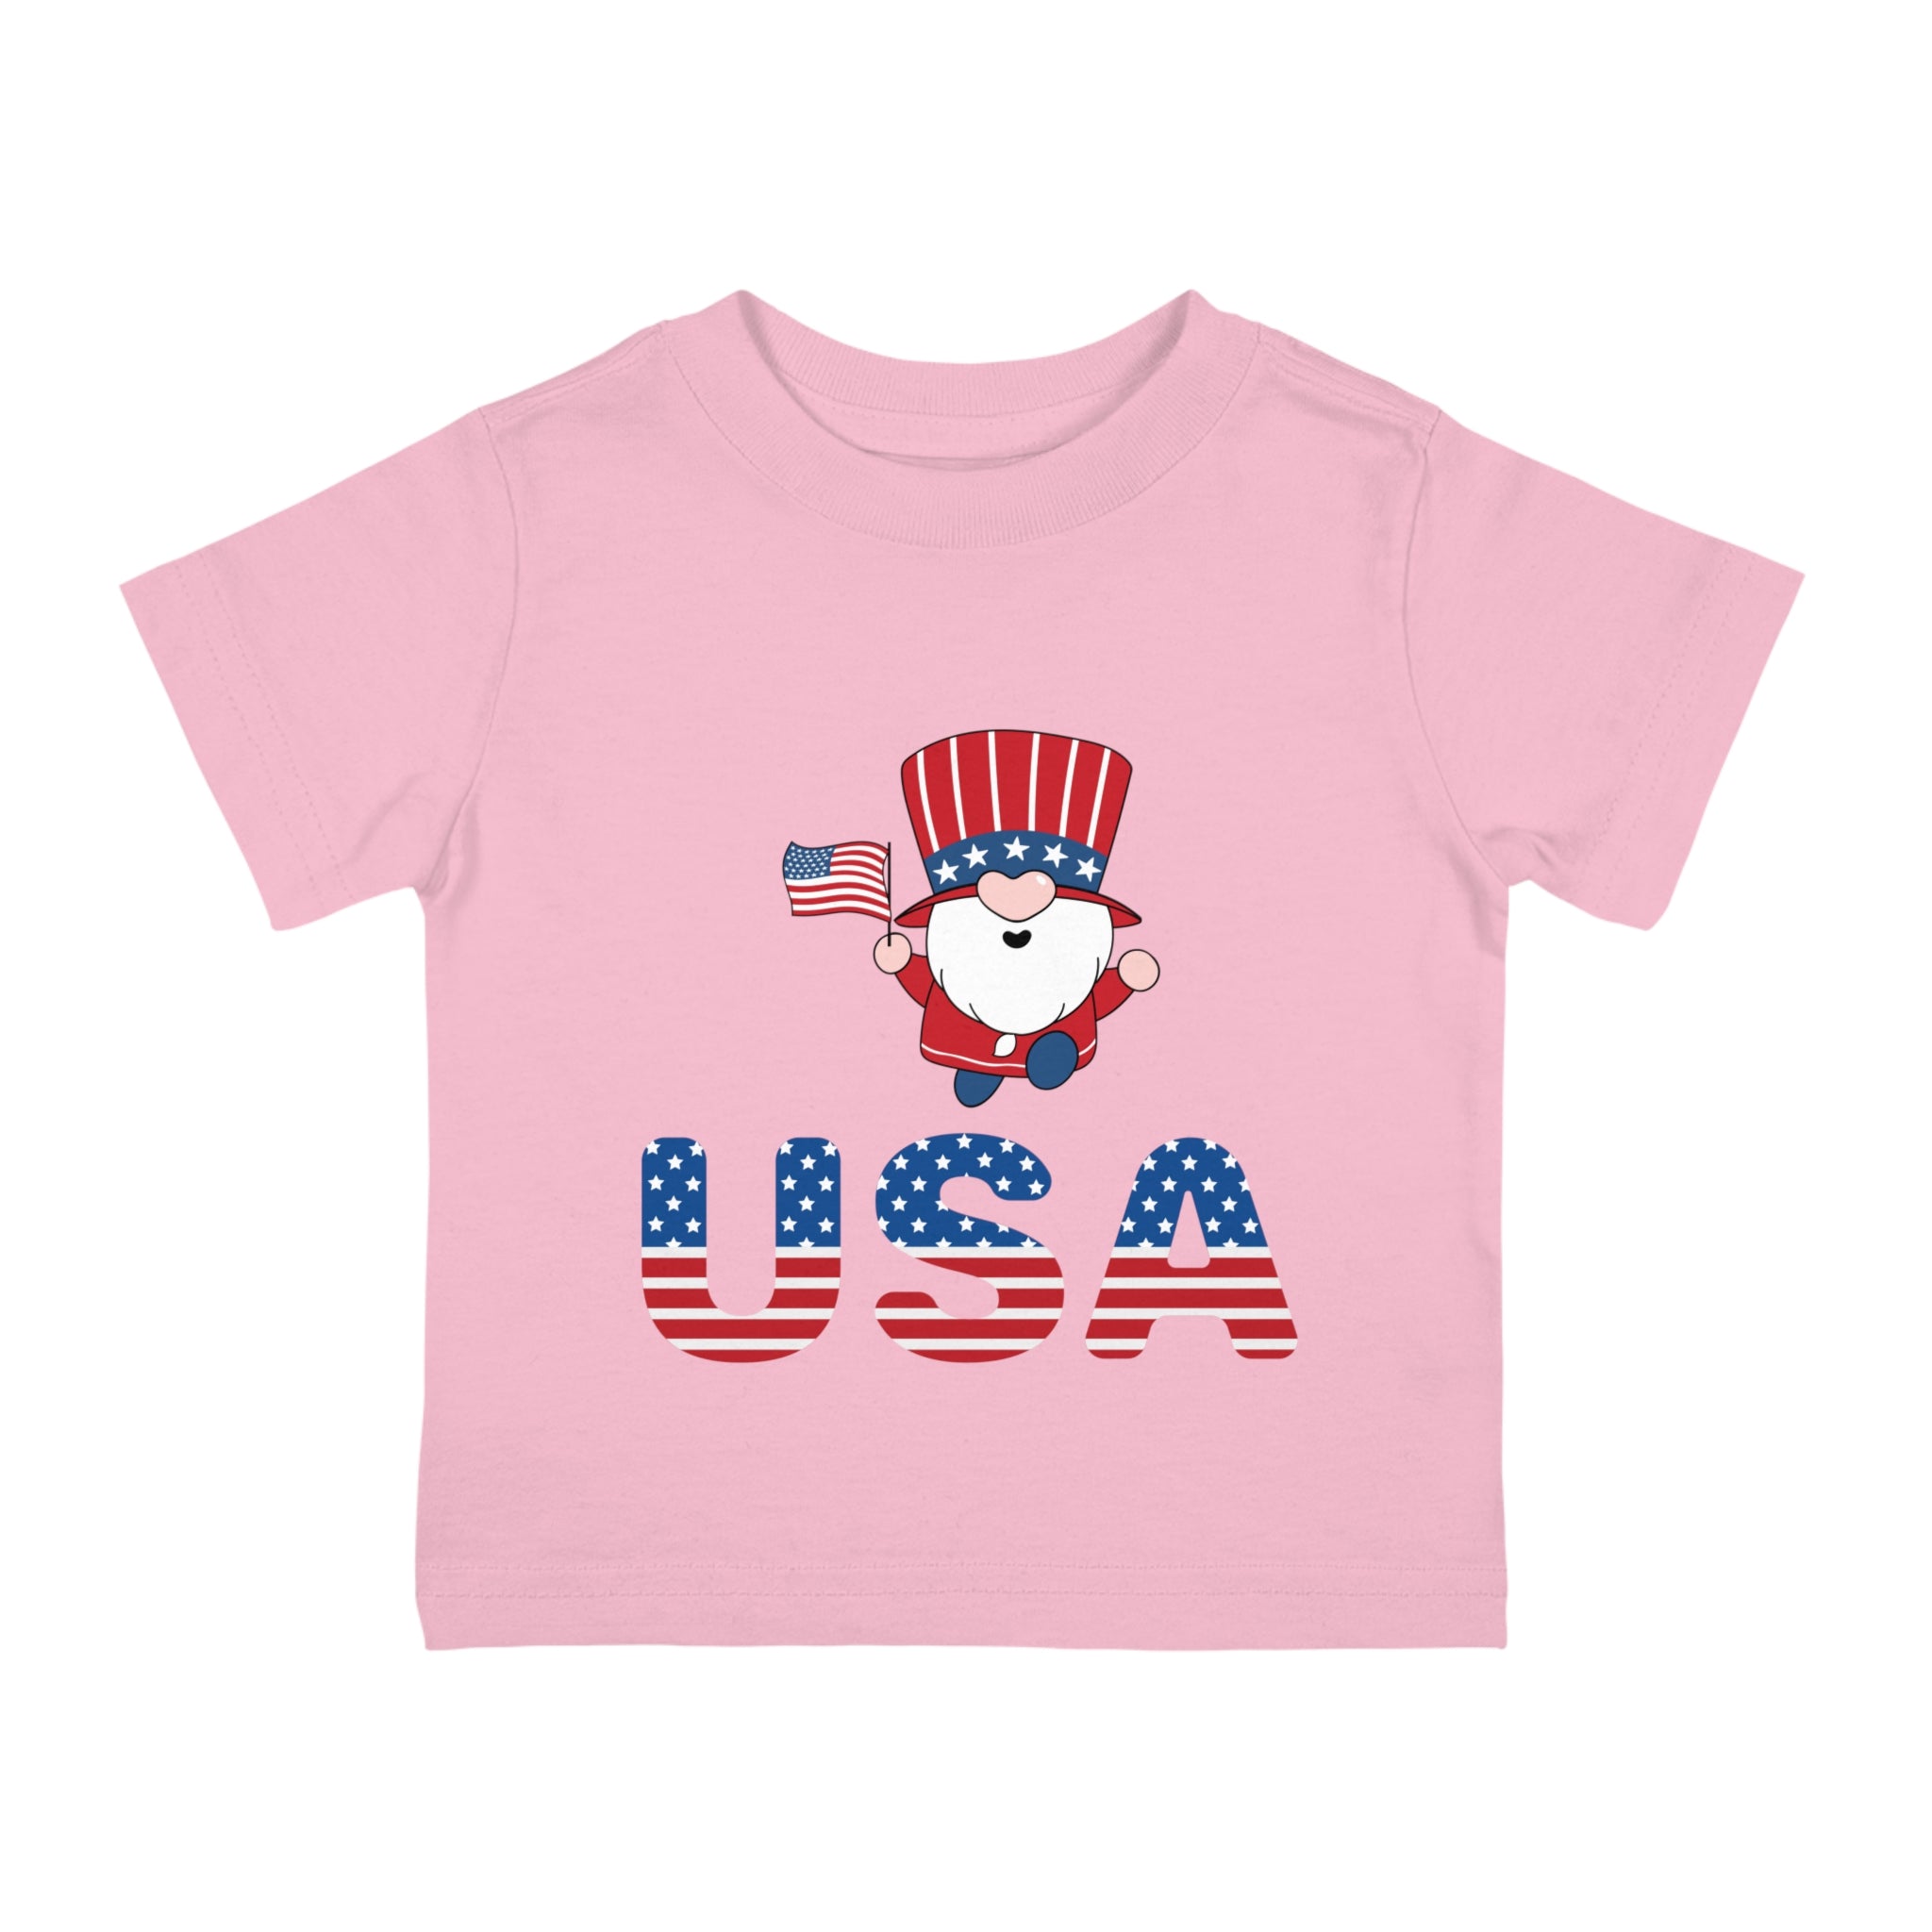 USA Infant Shirt, Baby Tee, Infant Tee